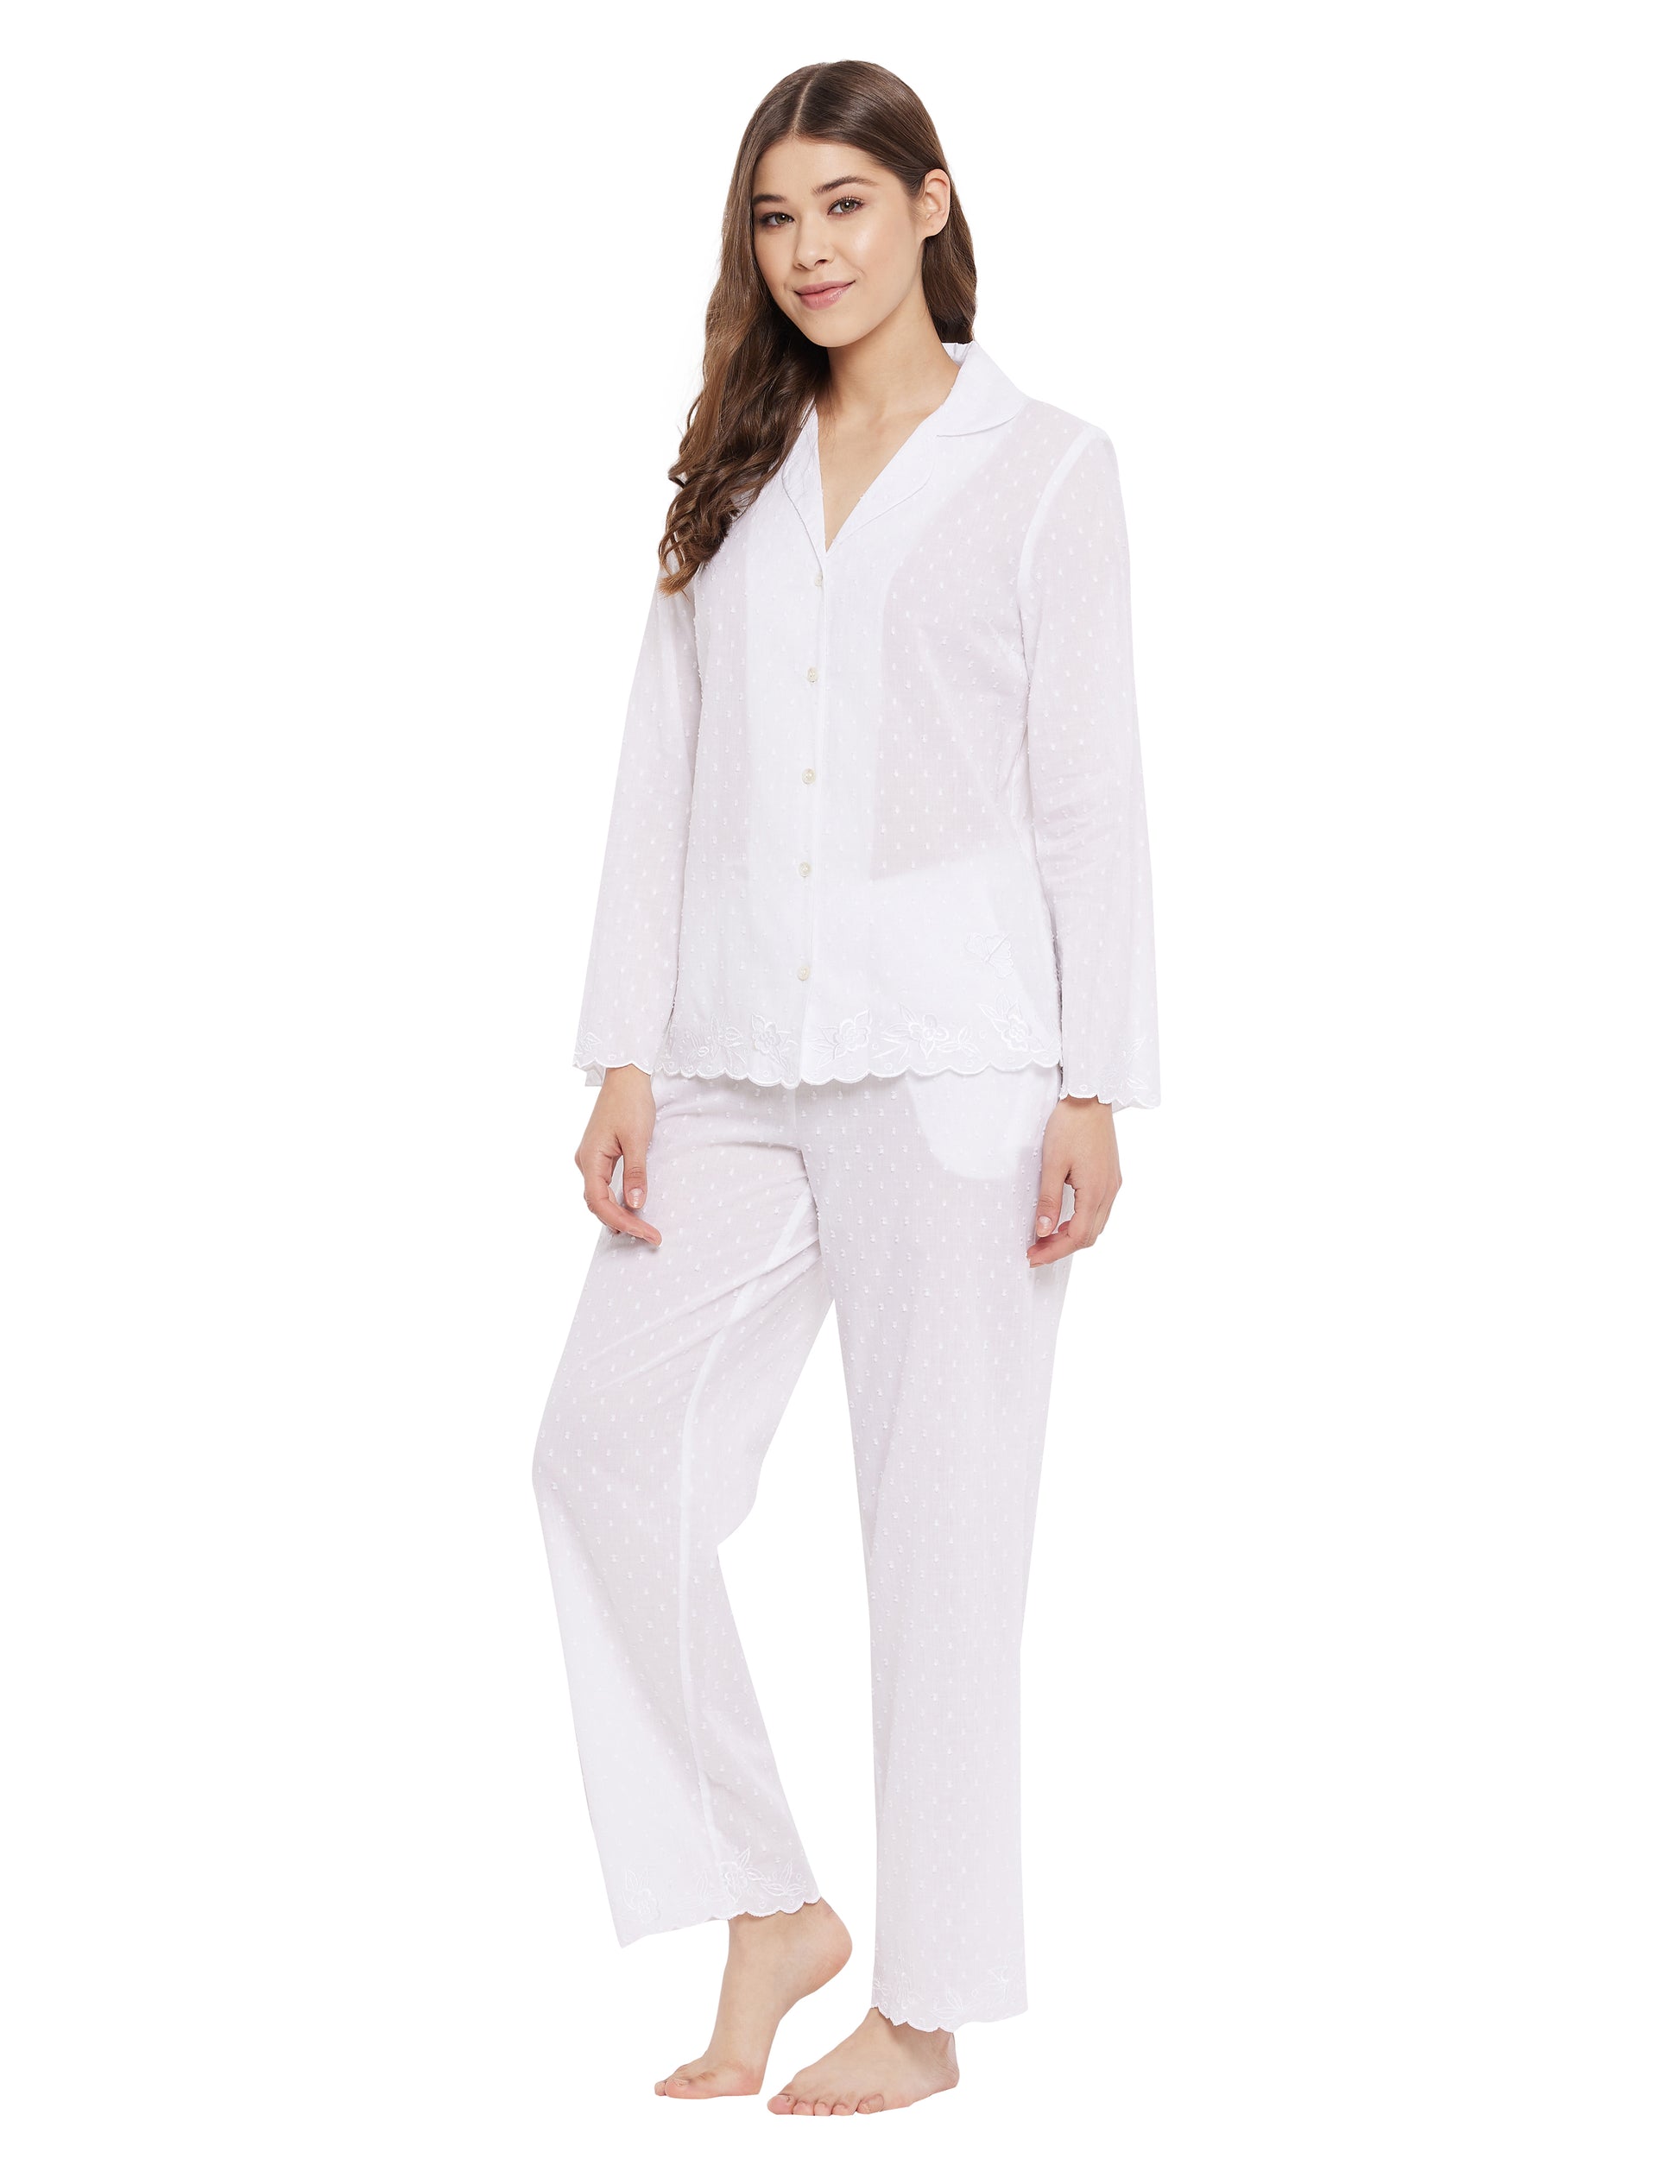 Women's Pajamas 100% Premium Modal Sleepwear Pyjamas Plus Size Night Gown a